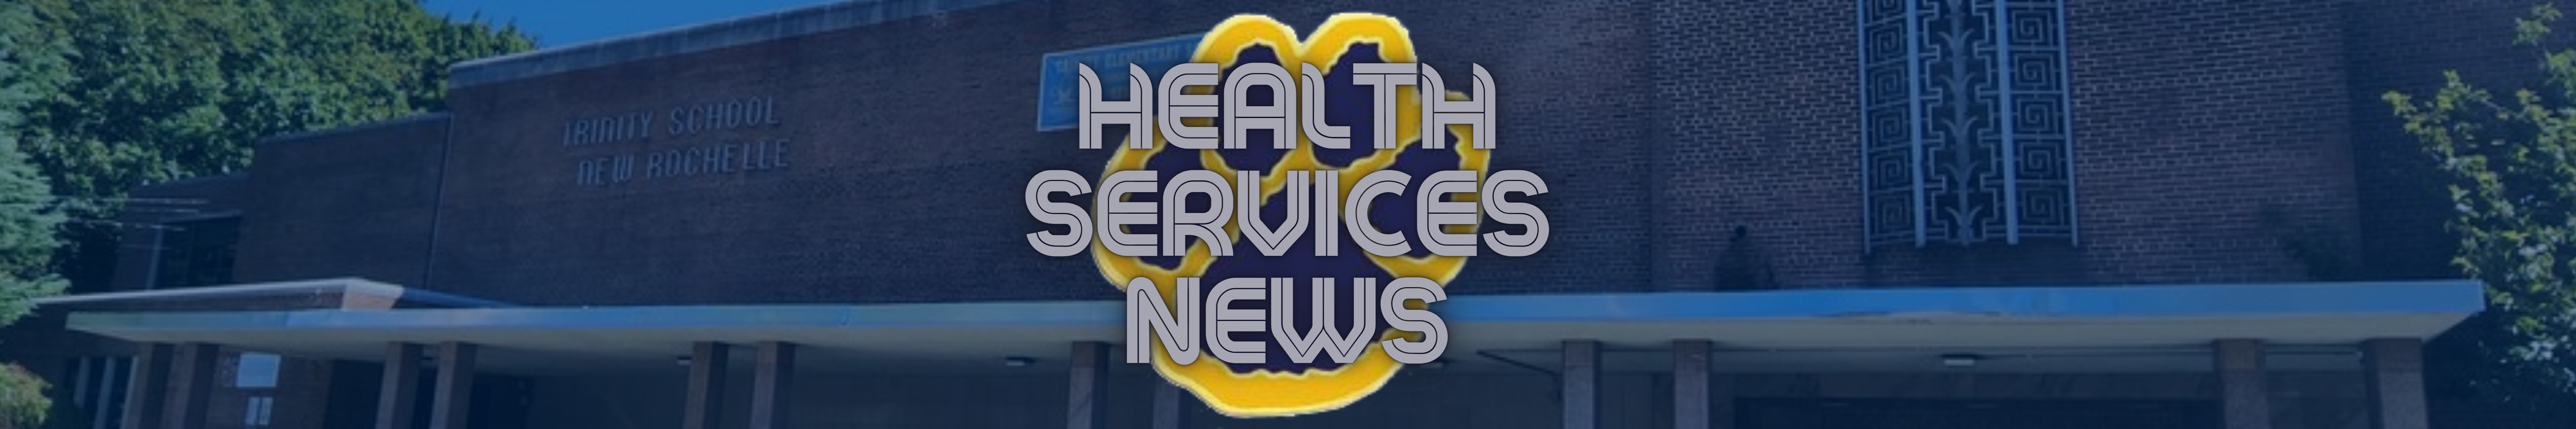 HEALTH SERVICES NEWS banner